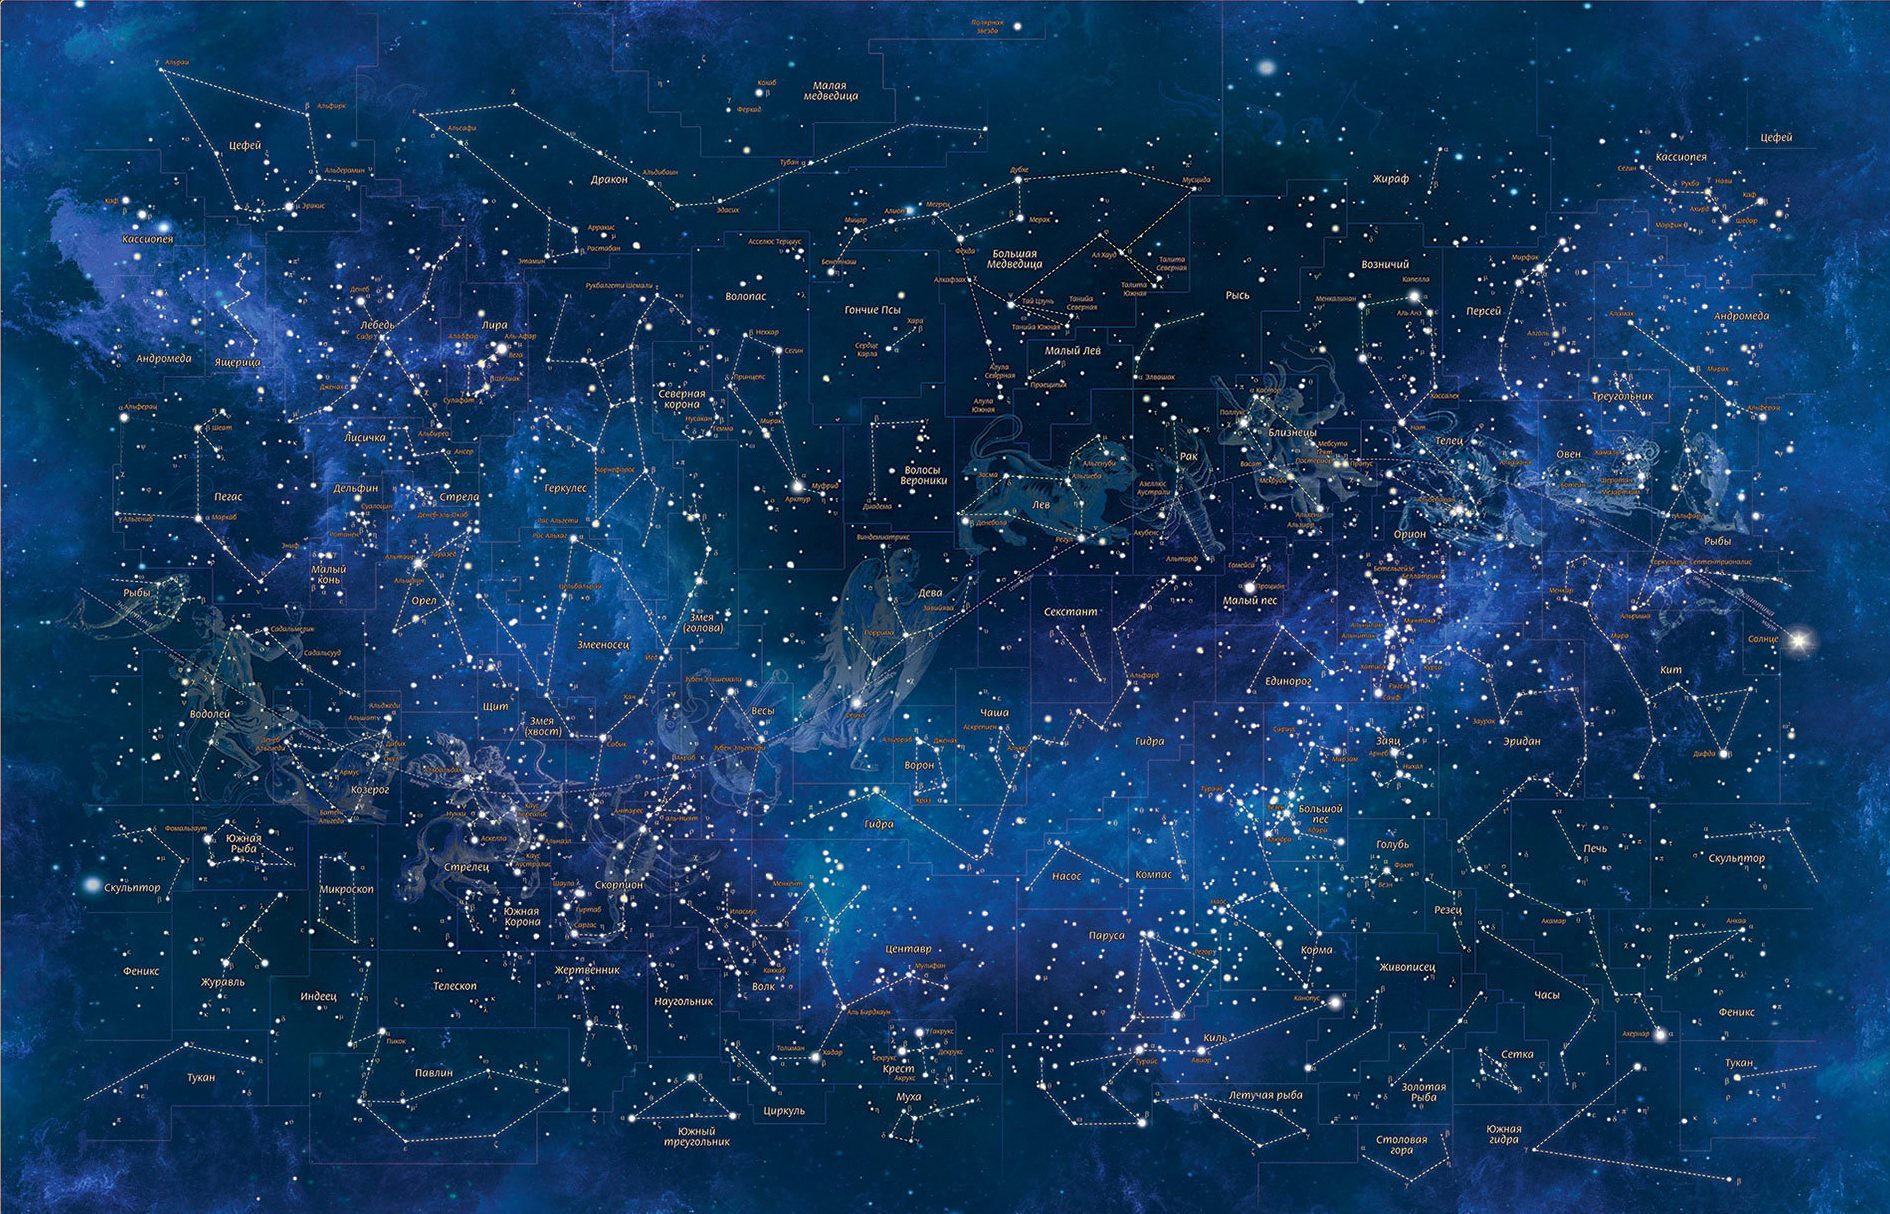 Карта звезд купить. Карта звездного неба. Астрономия созвездия карта звездного неба. Звёздная карта неба. Звездноемнебл созвездия.